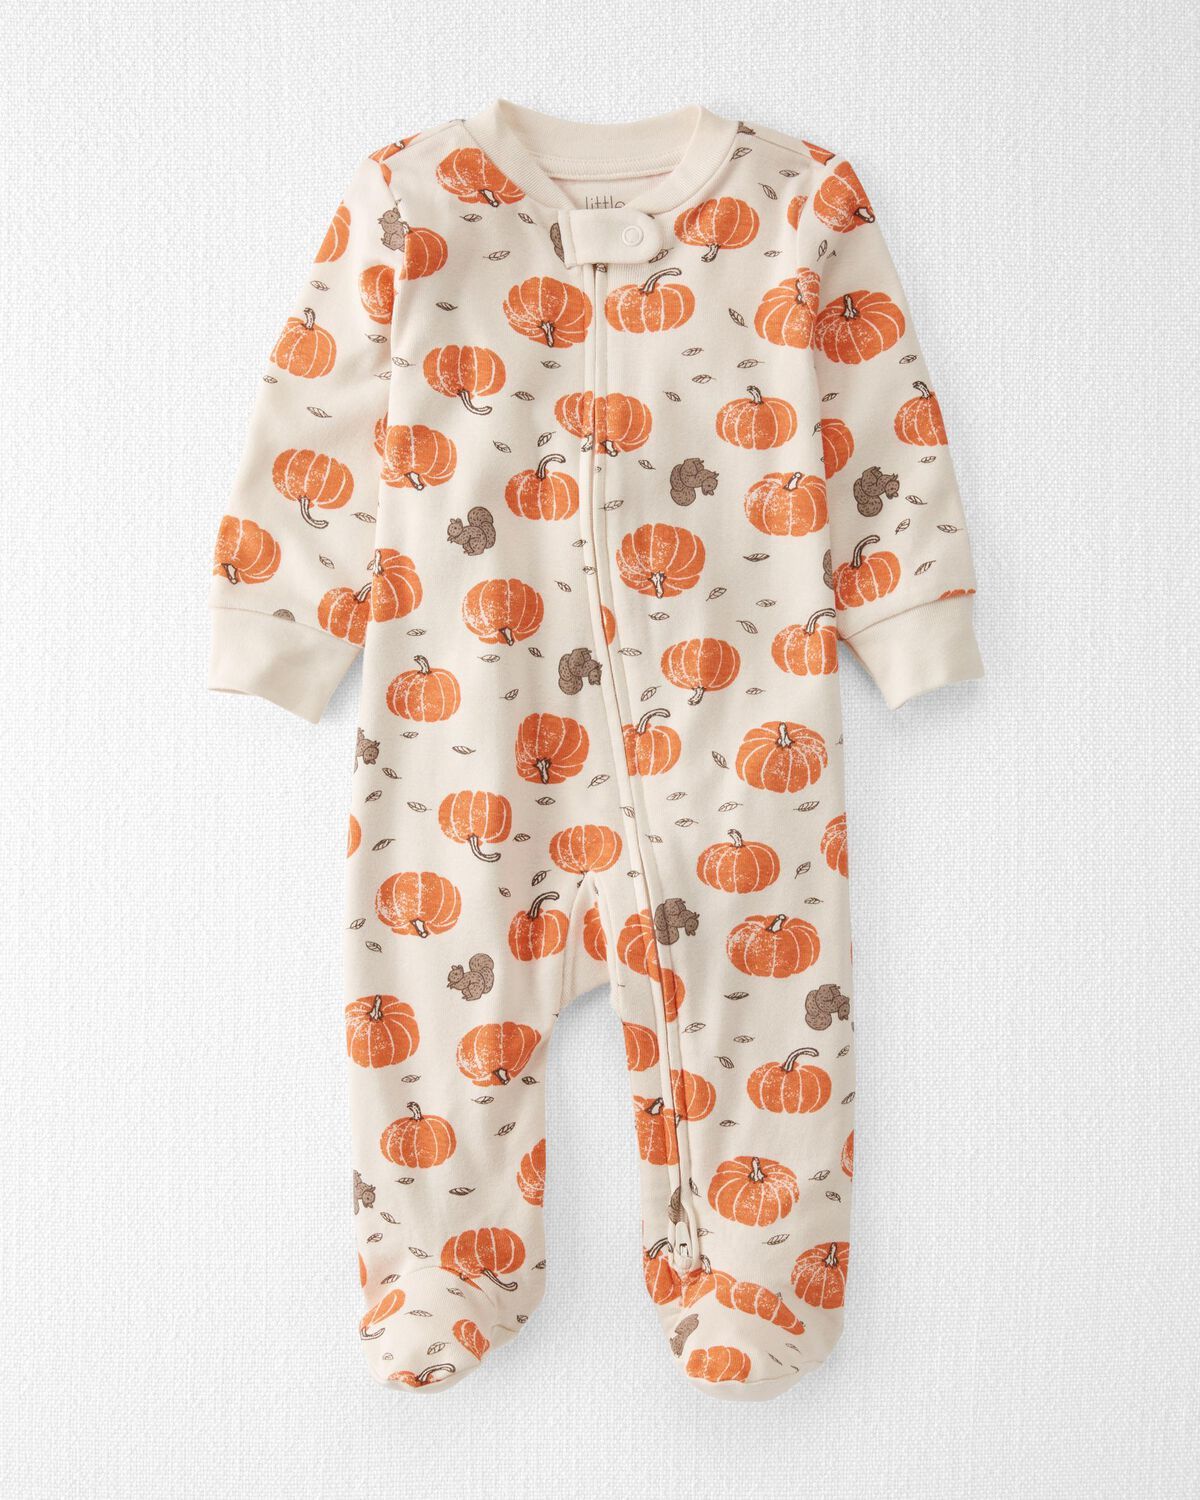 Harvest Pumpkins on Sweet Cream Baby Organic Cotton 2-Way Zip Sleep & Play Pajamas | carters.com | Carter's